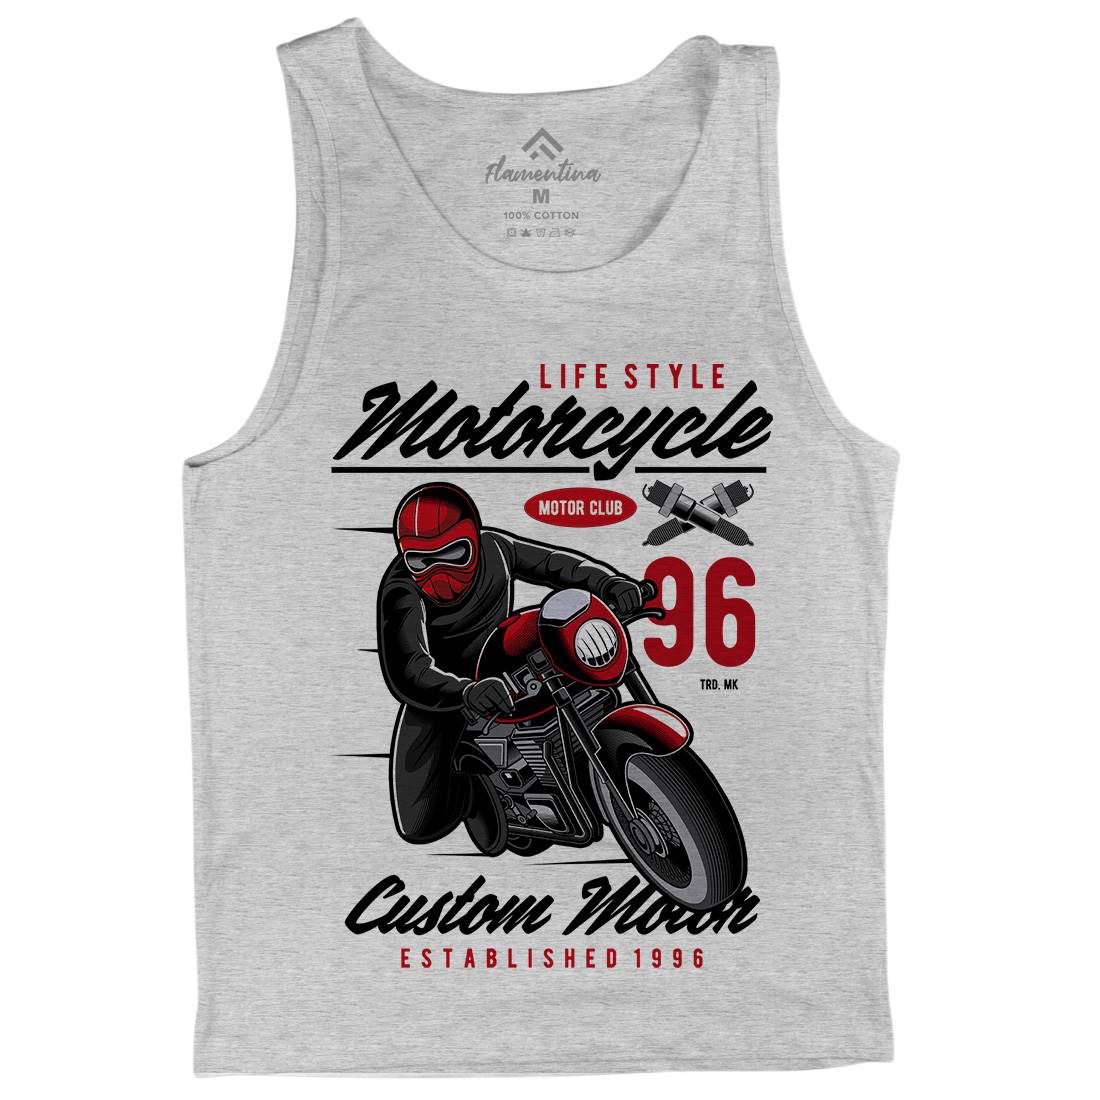 Lifestyle Mens Tank Top Vest Motorcycles C399